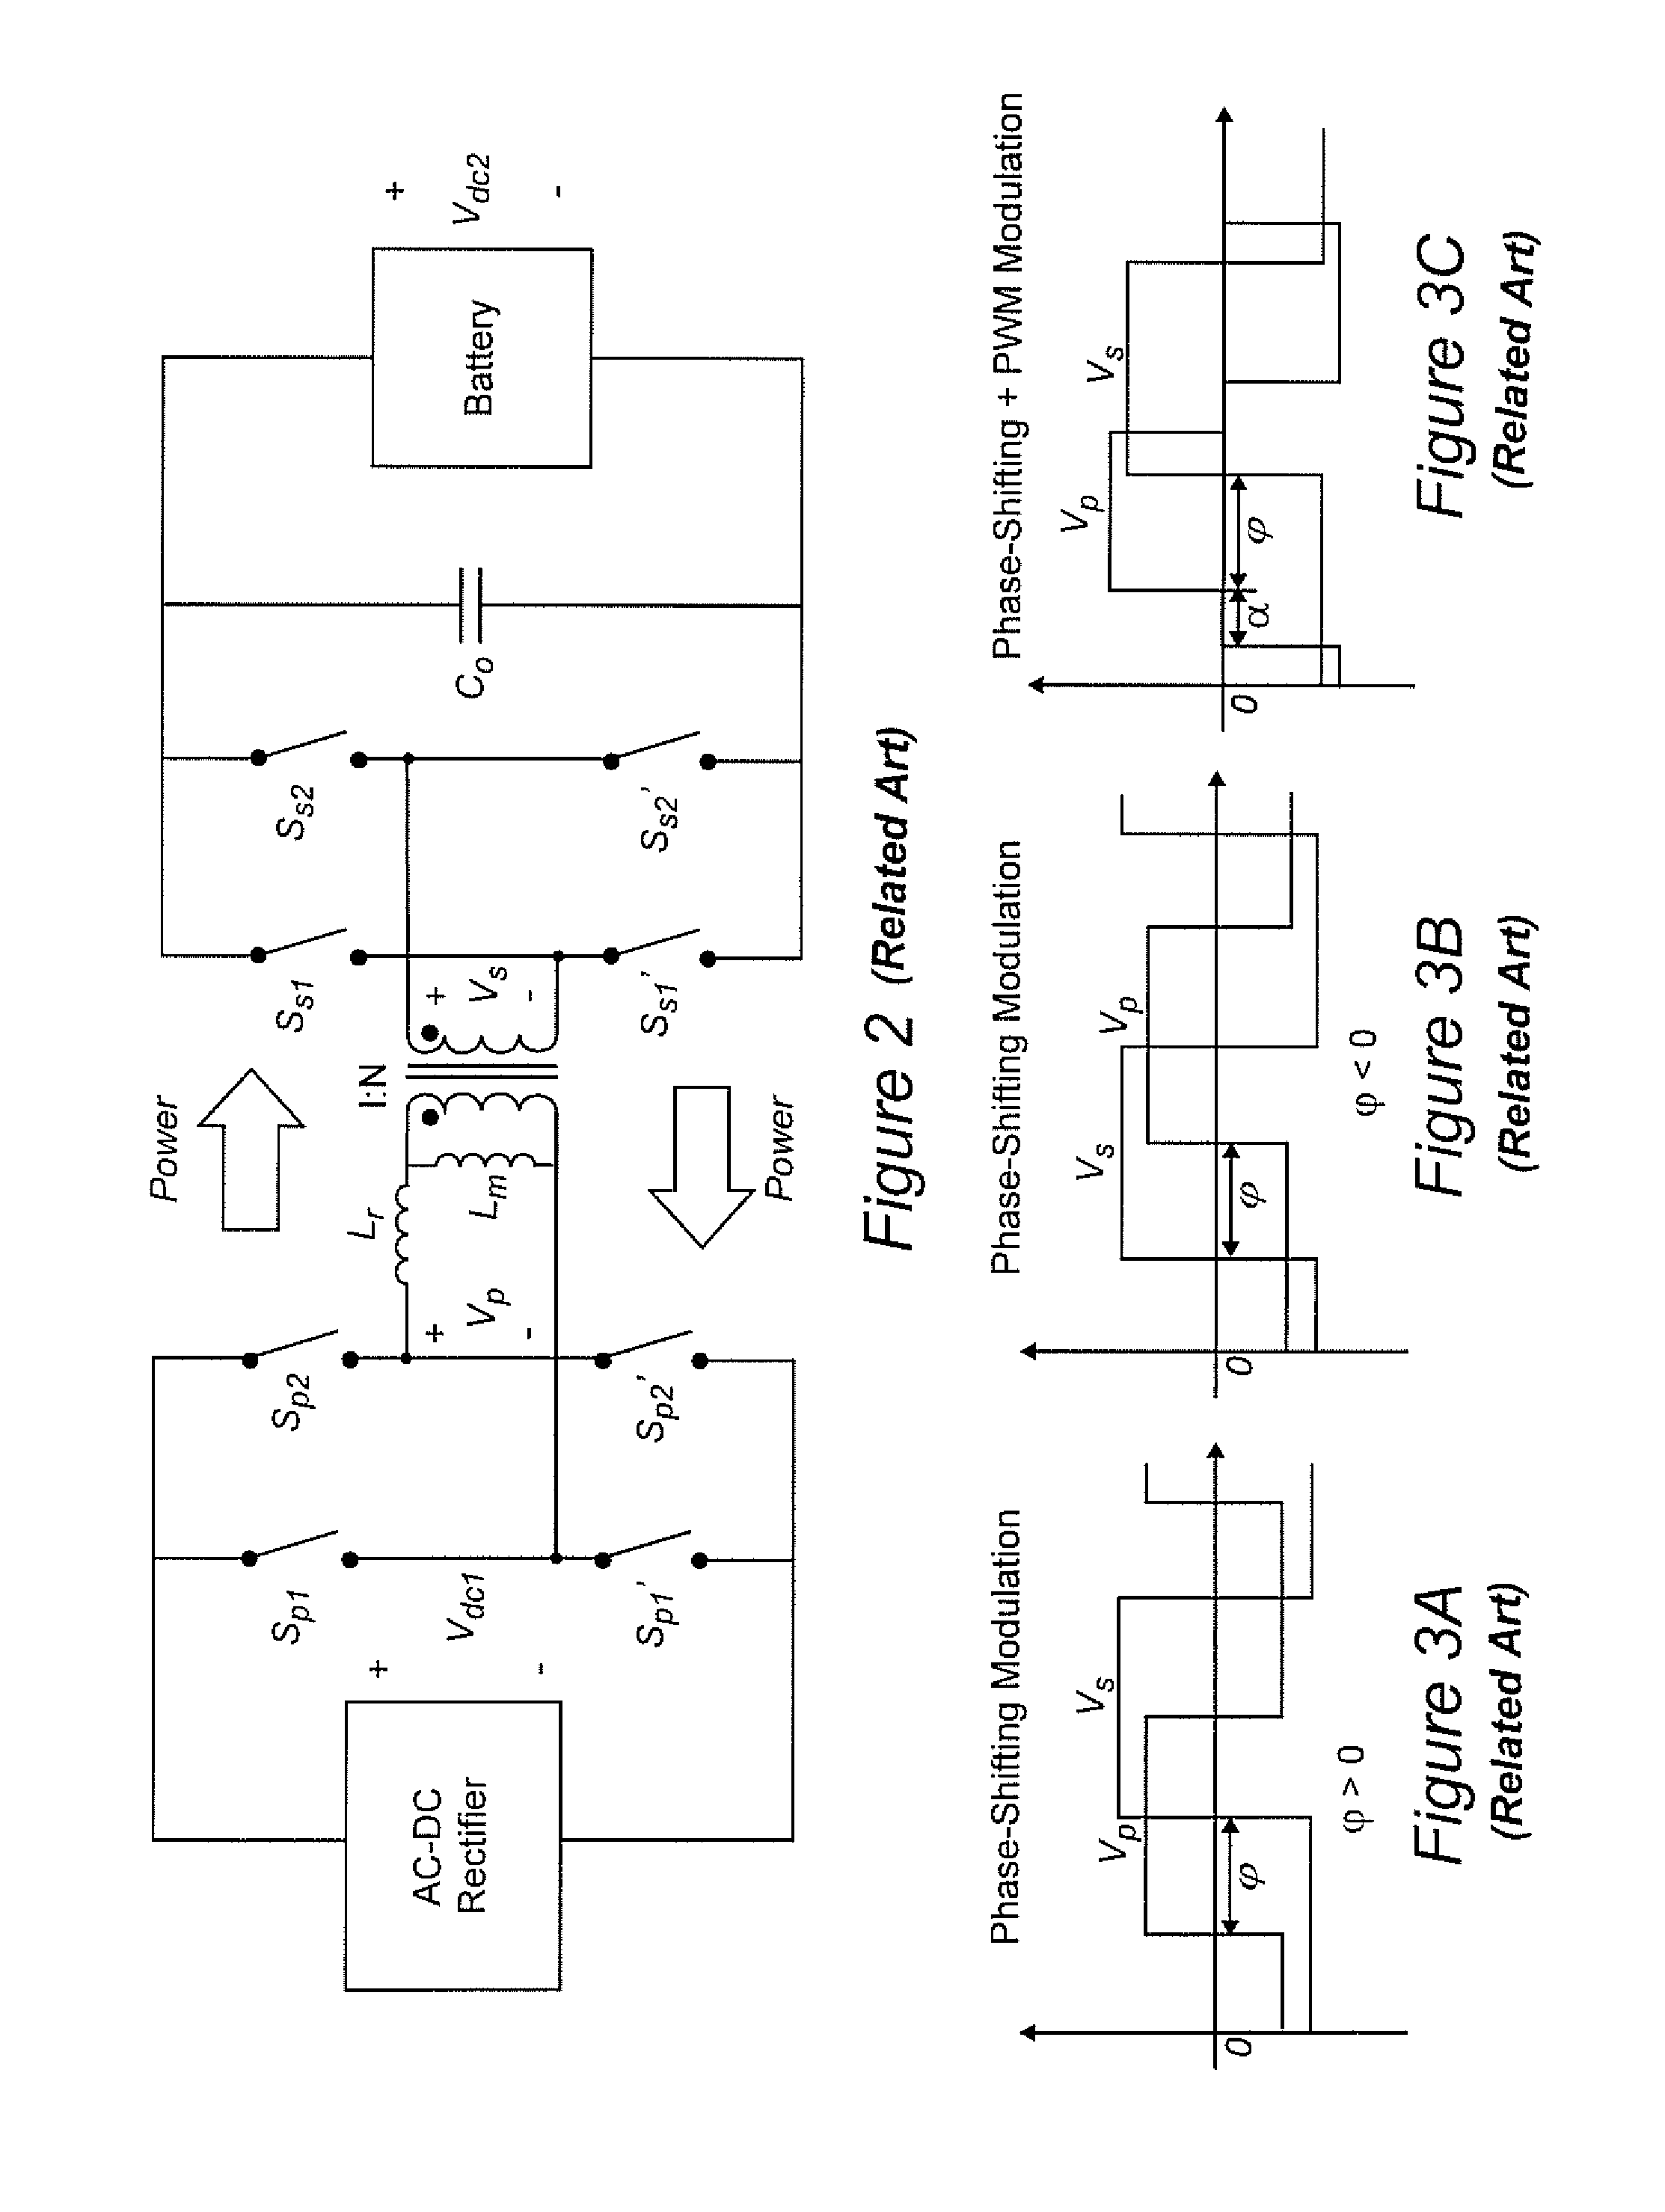 Pulse width modulated resonant power conversion